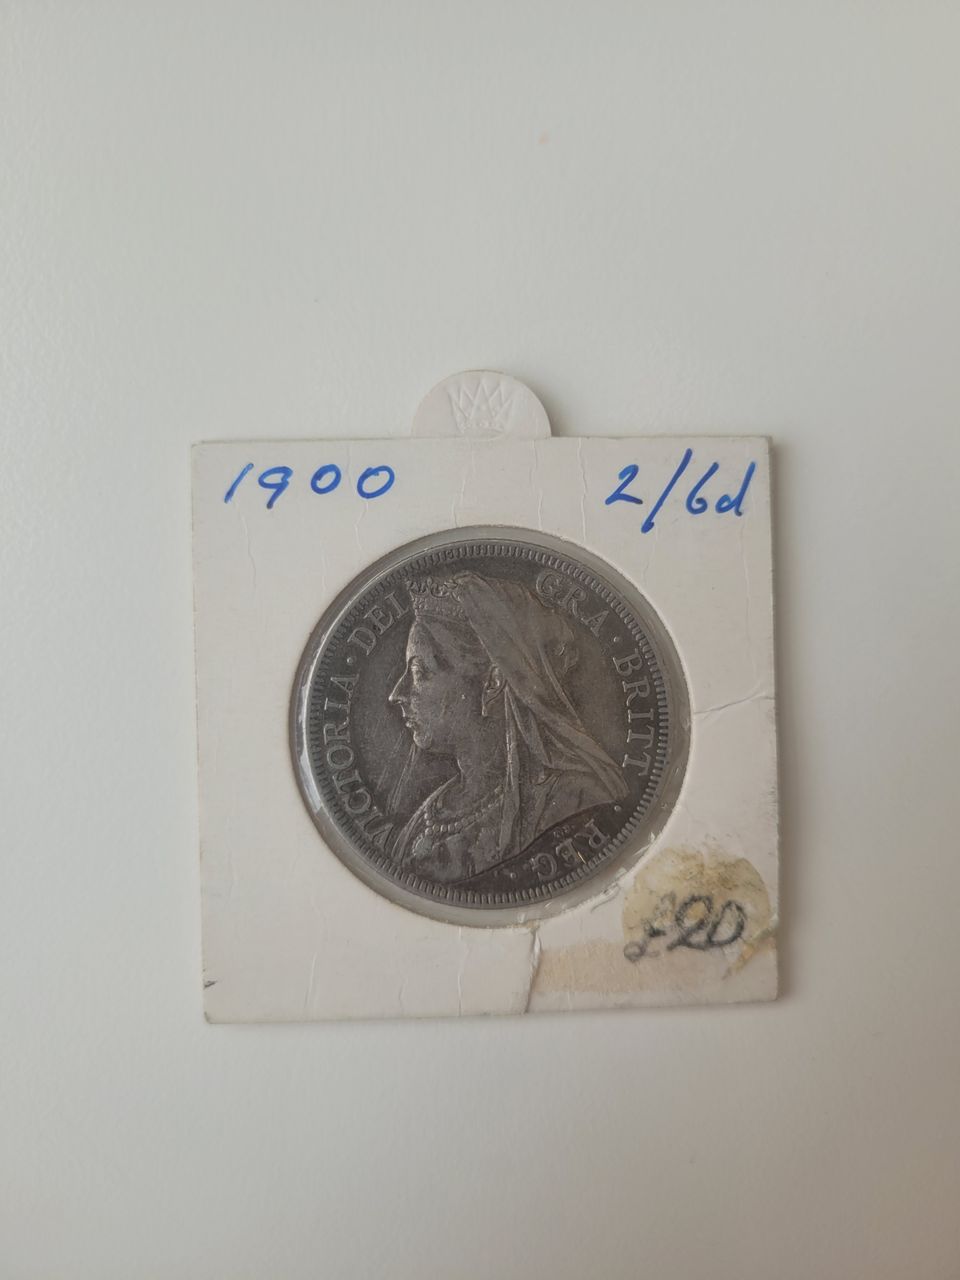 1900   Queen  Victoria  Half  Crown  (2/6d)  Silver  (92.5%)  Coin